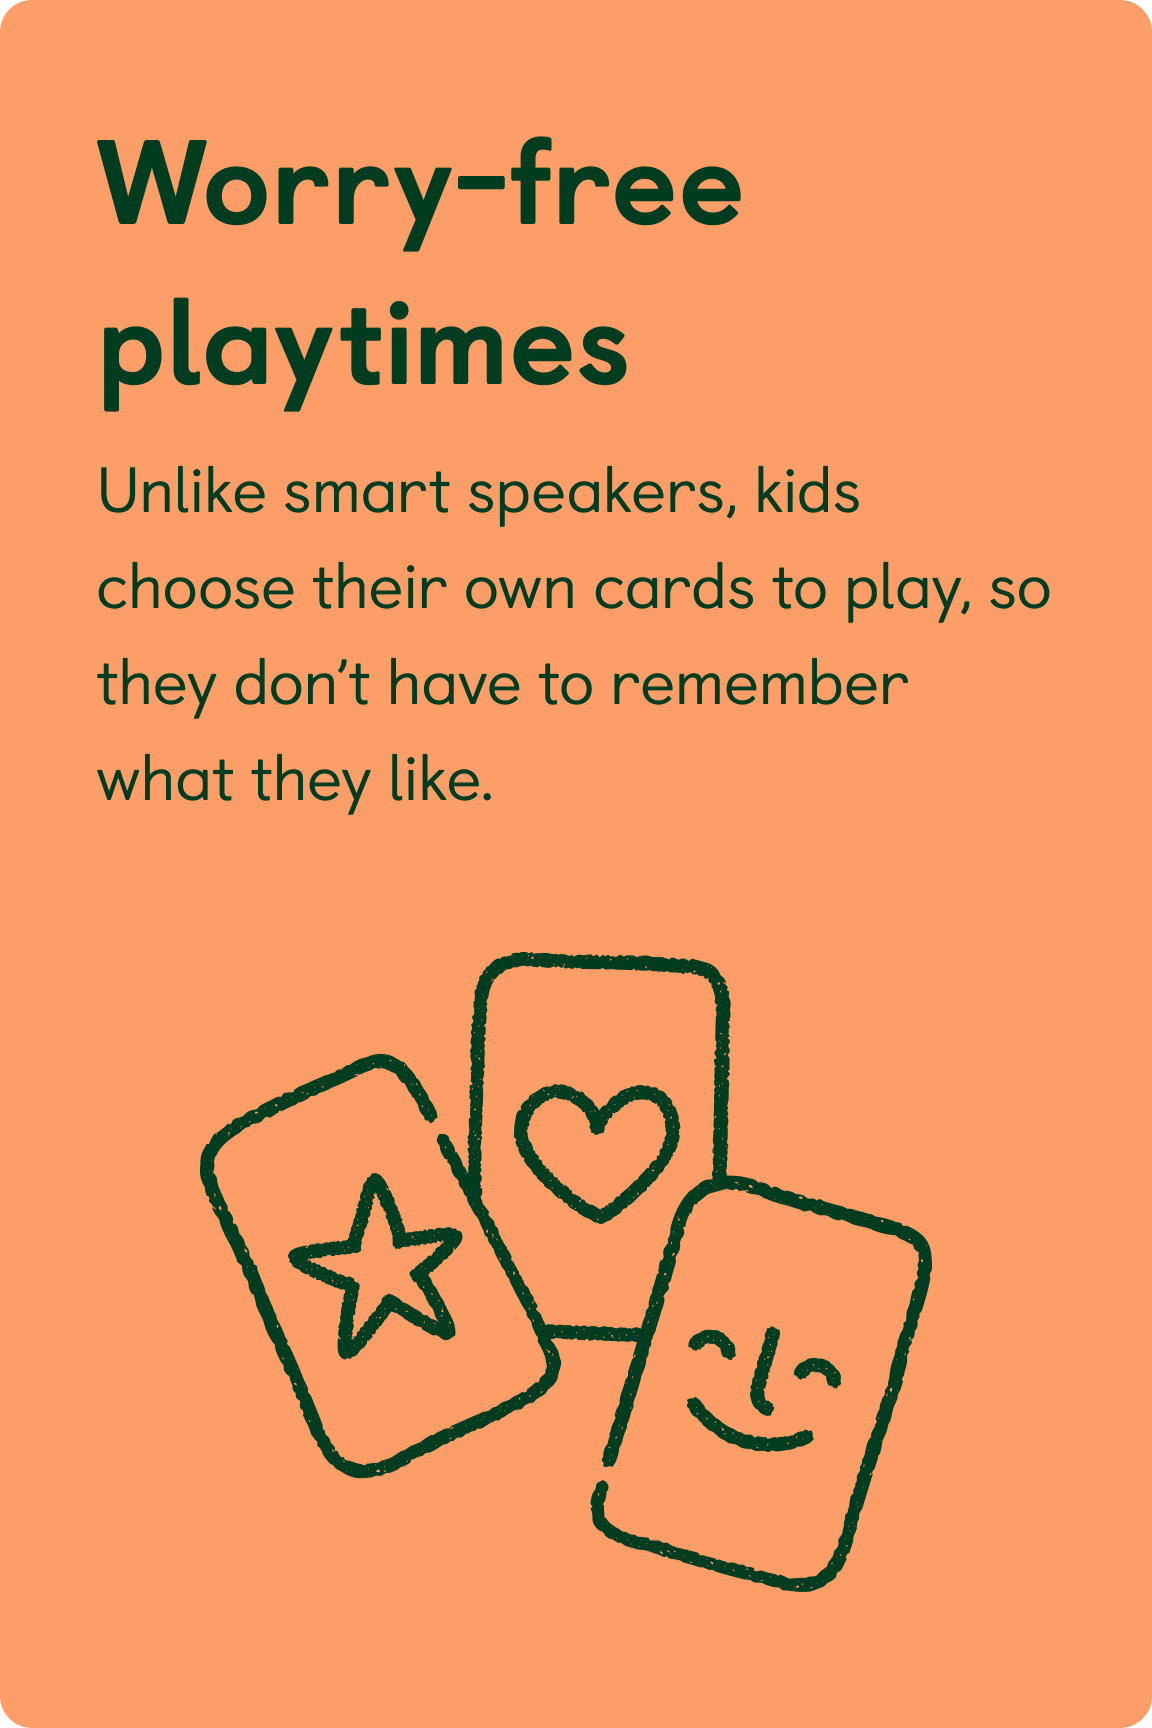 Worry-free playtimes. Unlike smart speakers, kids choose their own cards to play